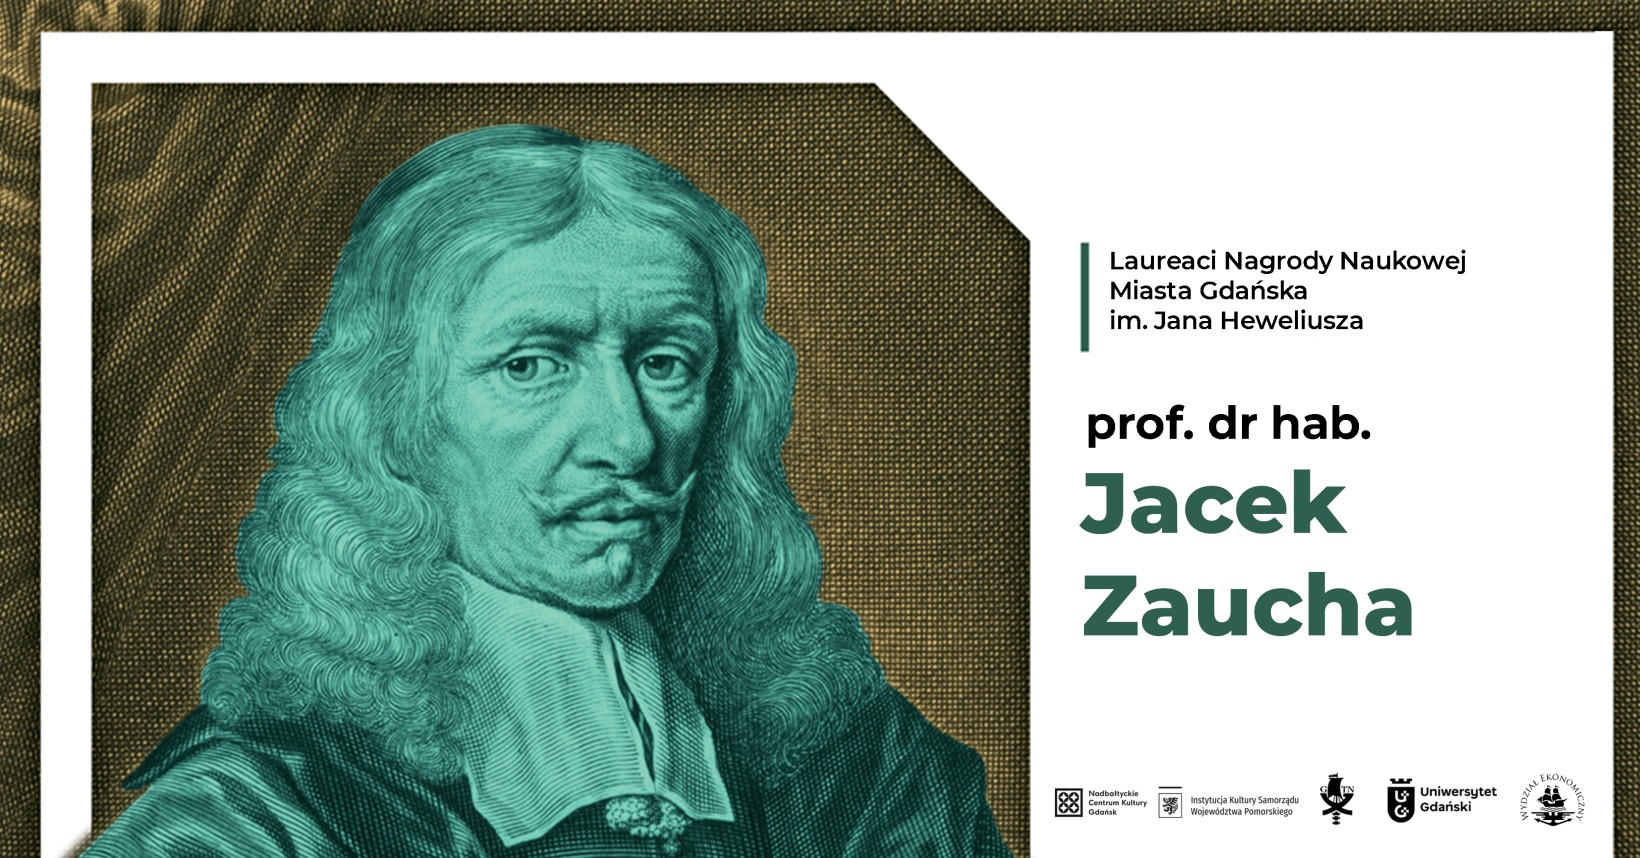 rycina portret Heweliusza, napis "Laureaci Nagrody Naukowej Miasta Gdańska im. Jana Heweliusza. Prof. dr hab. Jacek Zaucha"